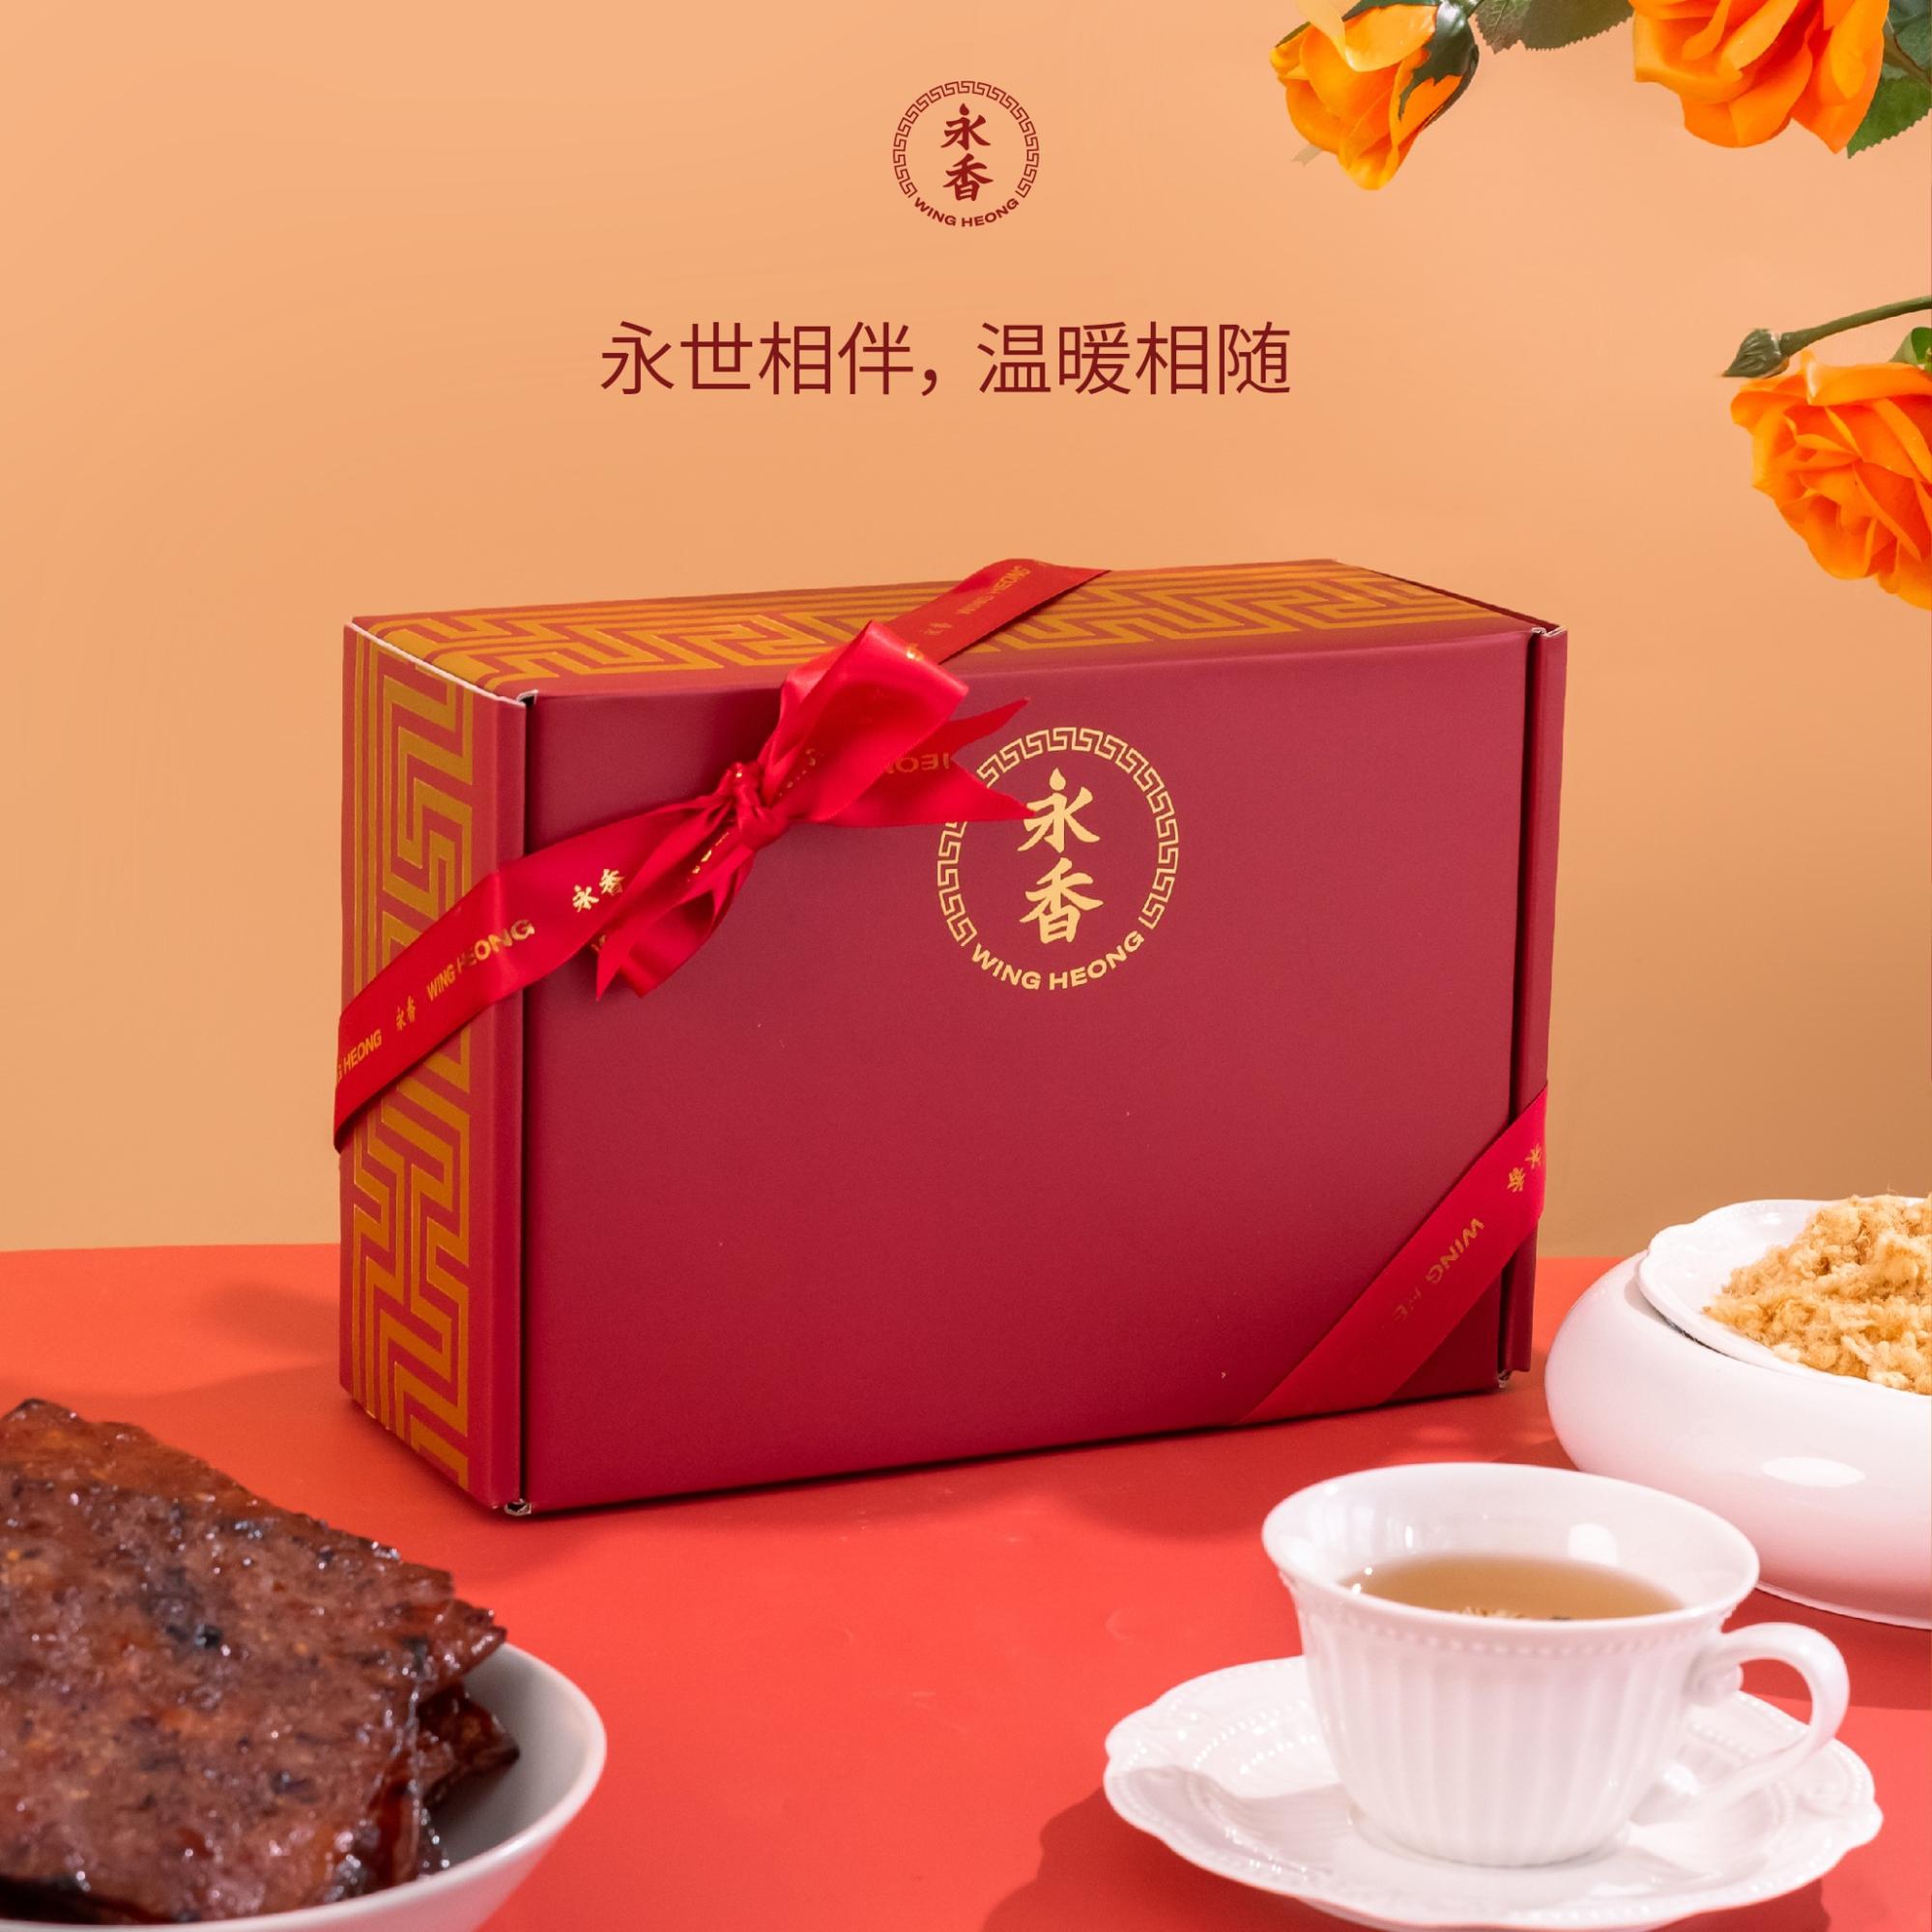 bak kwa in Msia - wing heong cny gift box